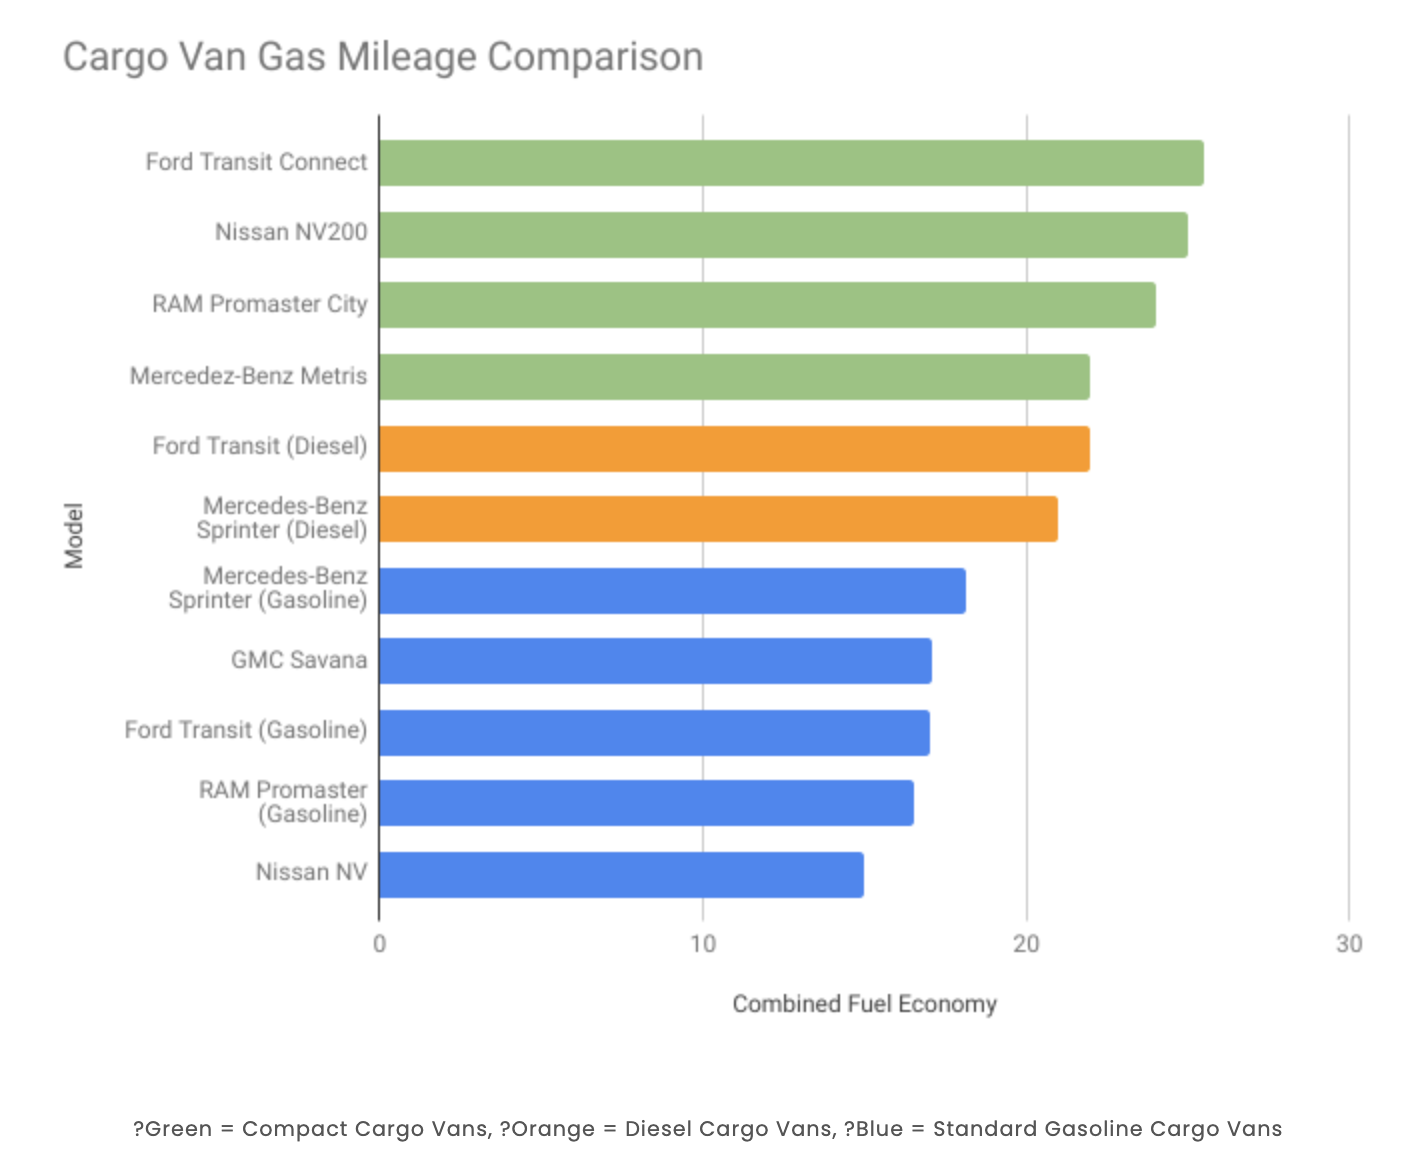 https://momentumiot.com/what-is-the-most-fuel-efficient-cargo-van/